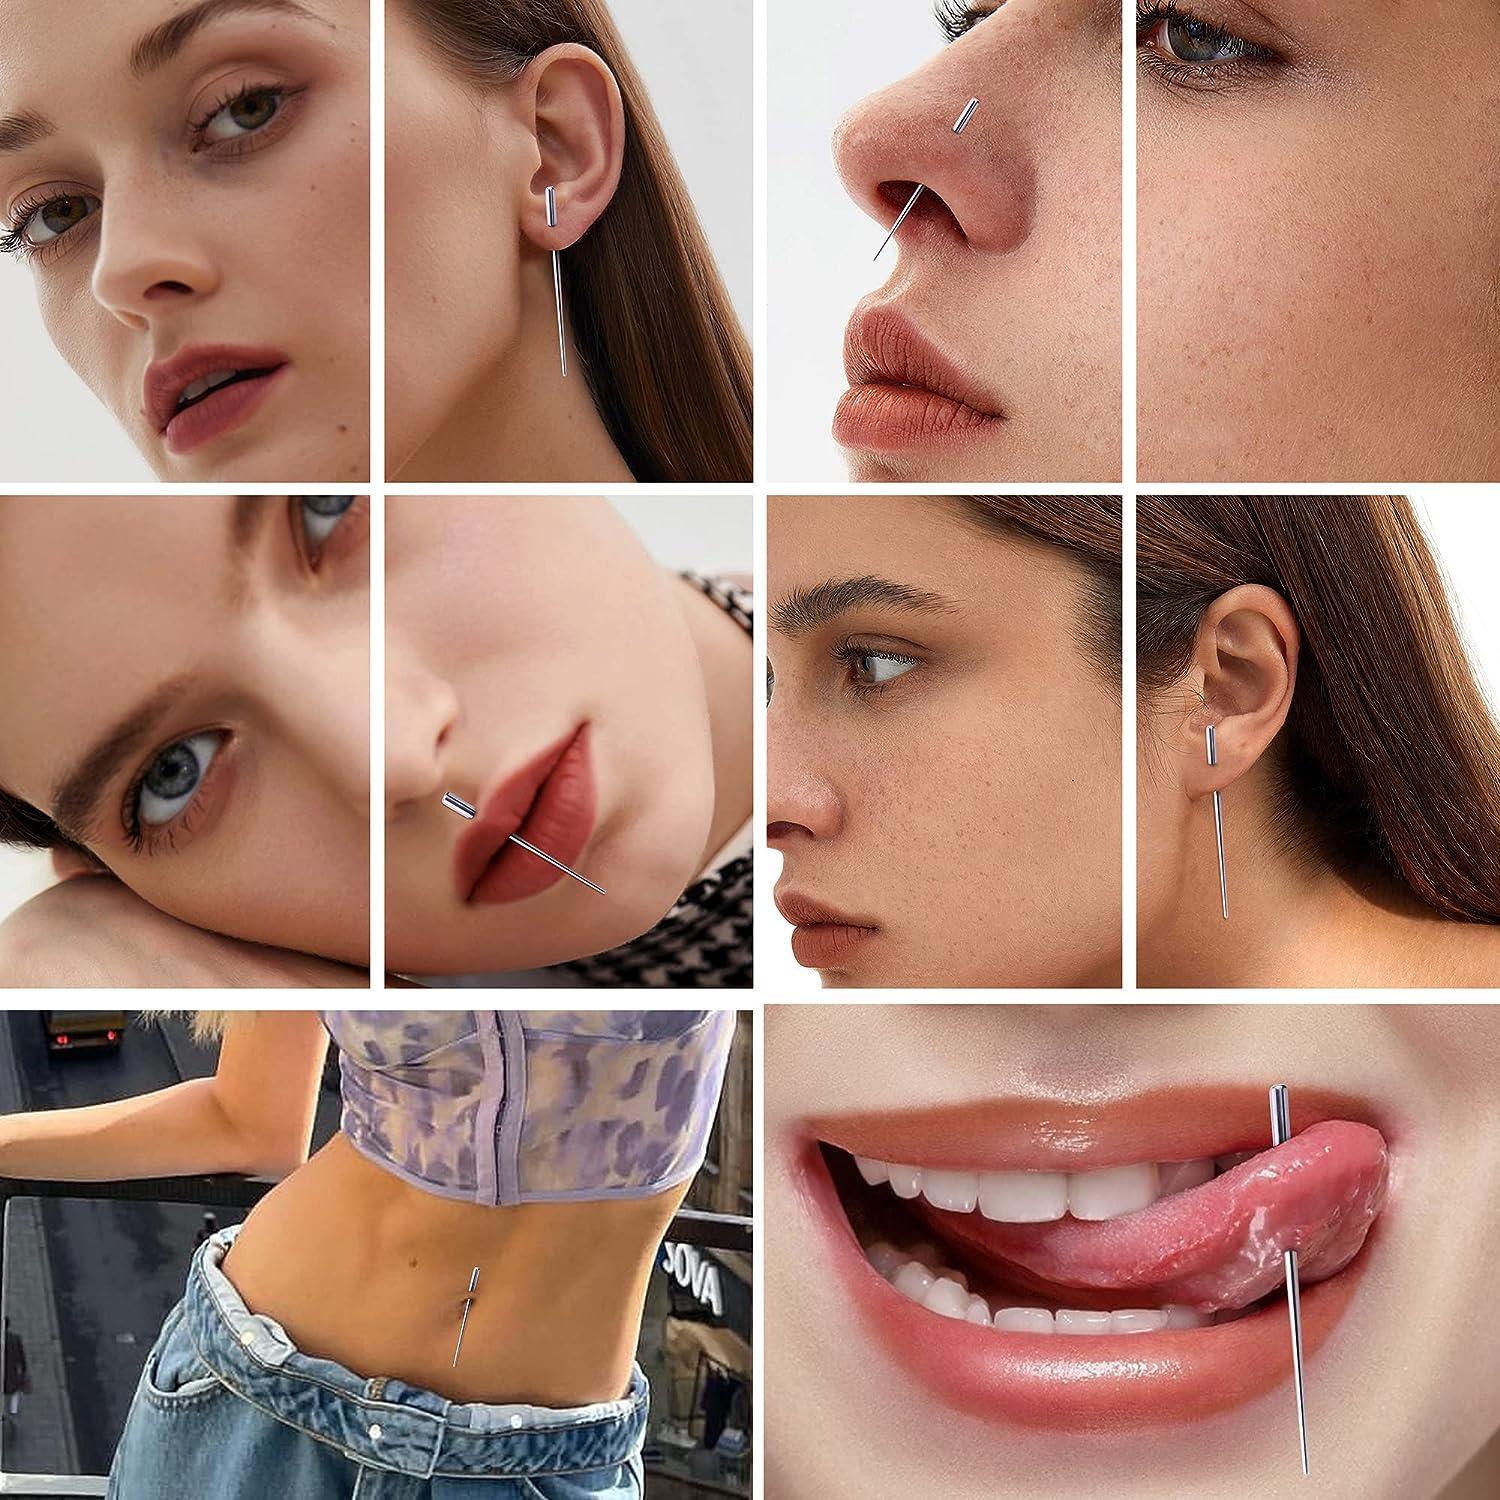 BESTEEL 3 Pcs 316L Surgical Steel Piercing Taper Insertion Pins, Pop Taper  Piercings Kit for Ear/Nose/Lip/Eyebrow/Belly/Nipple/Tongue Piercing